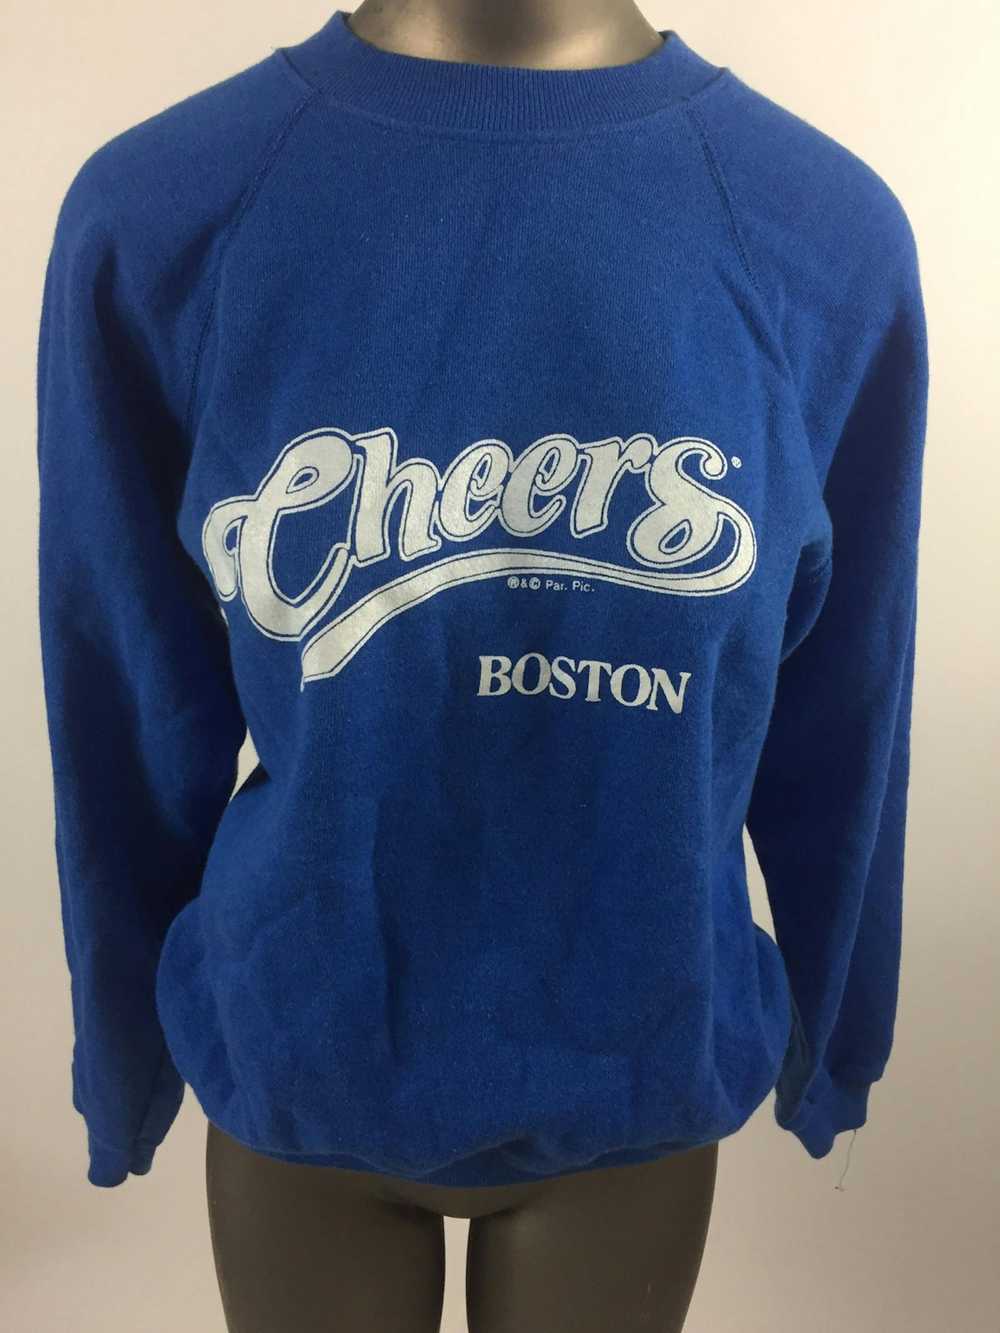 Hanes Vintage Hanes Cheers Boston Sweater - image 2